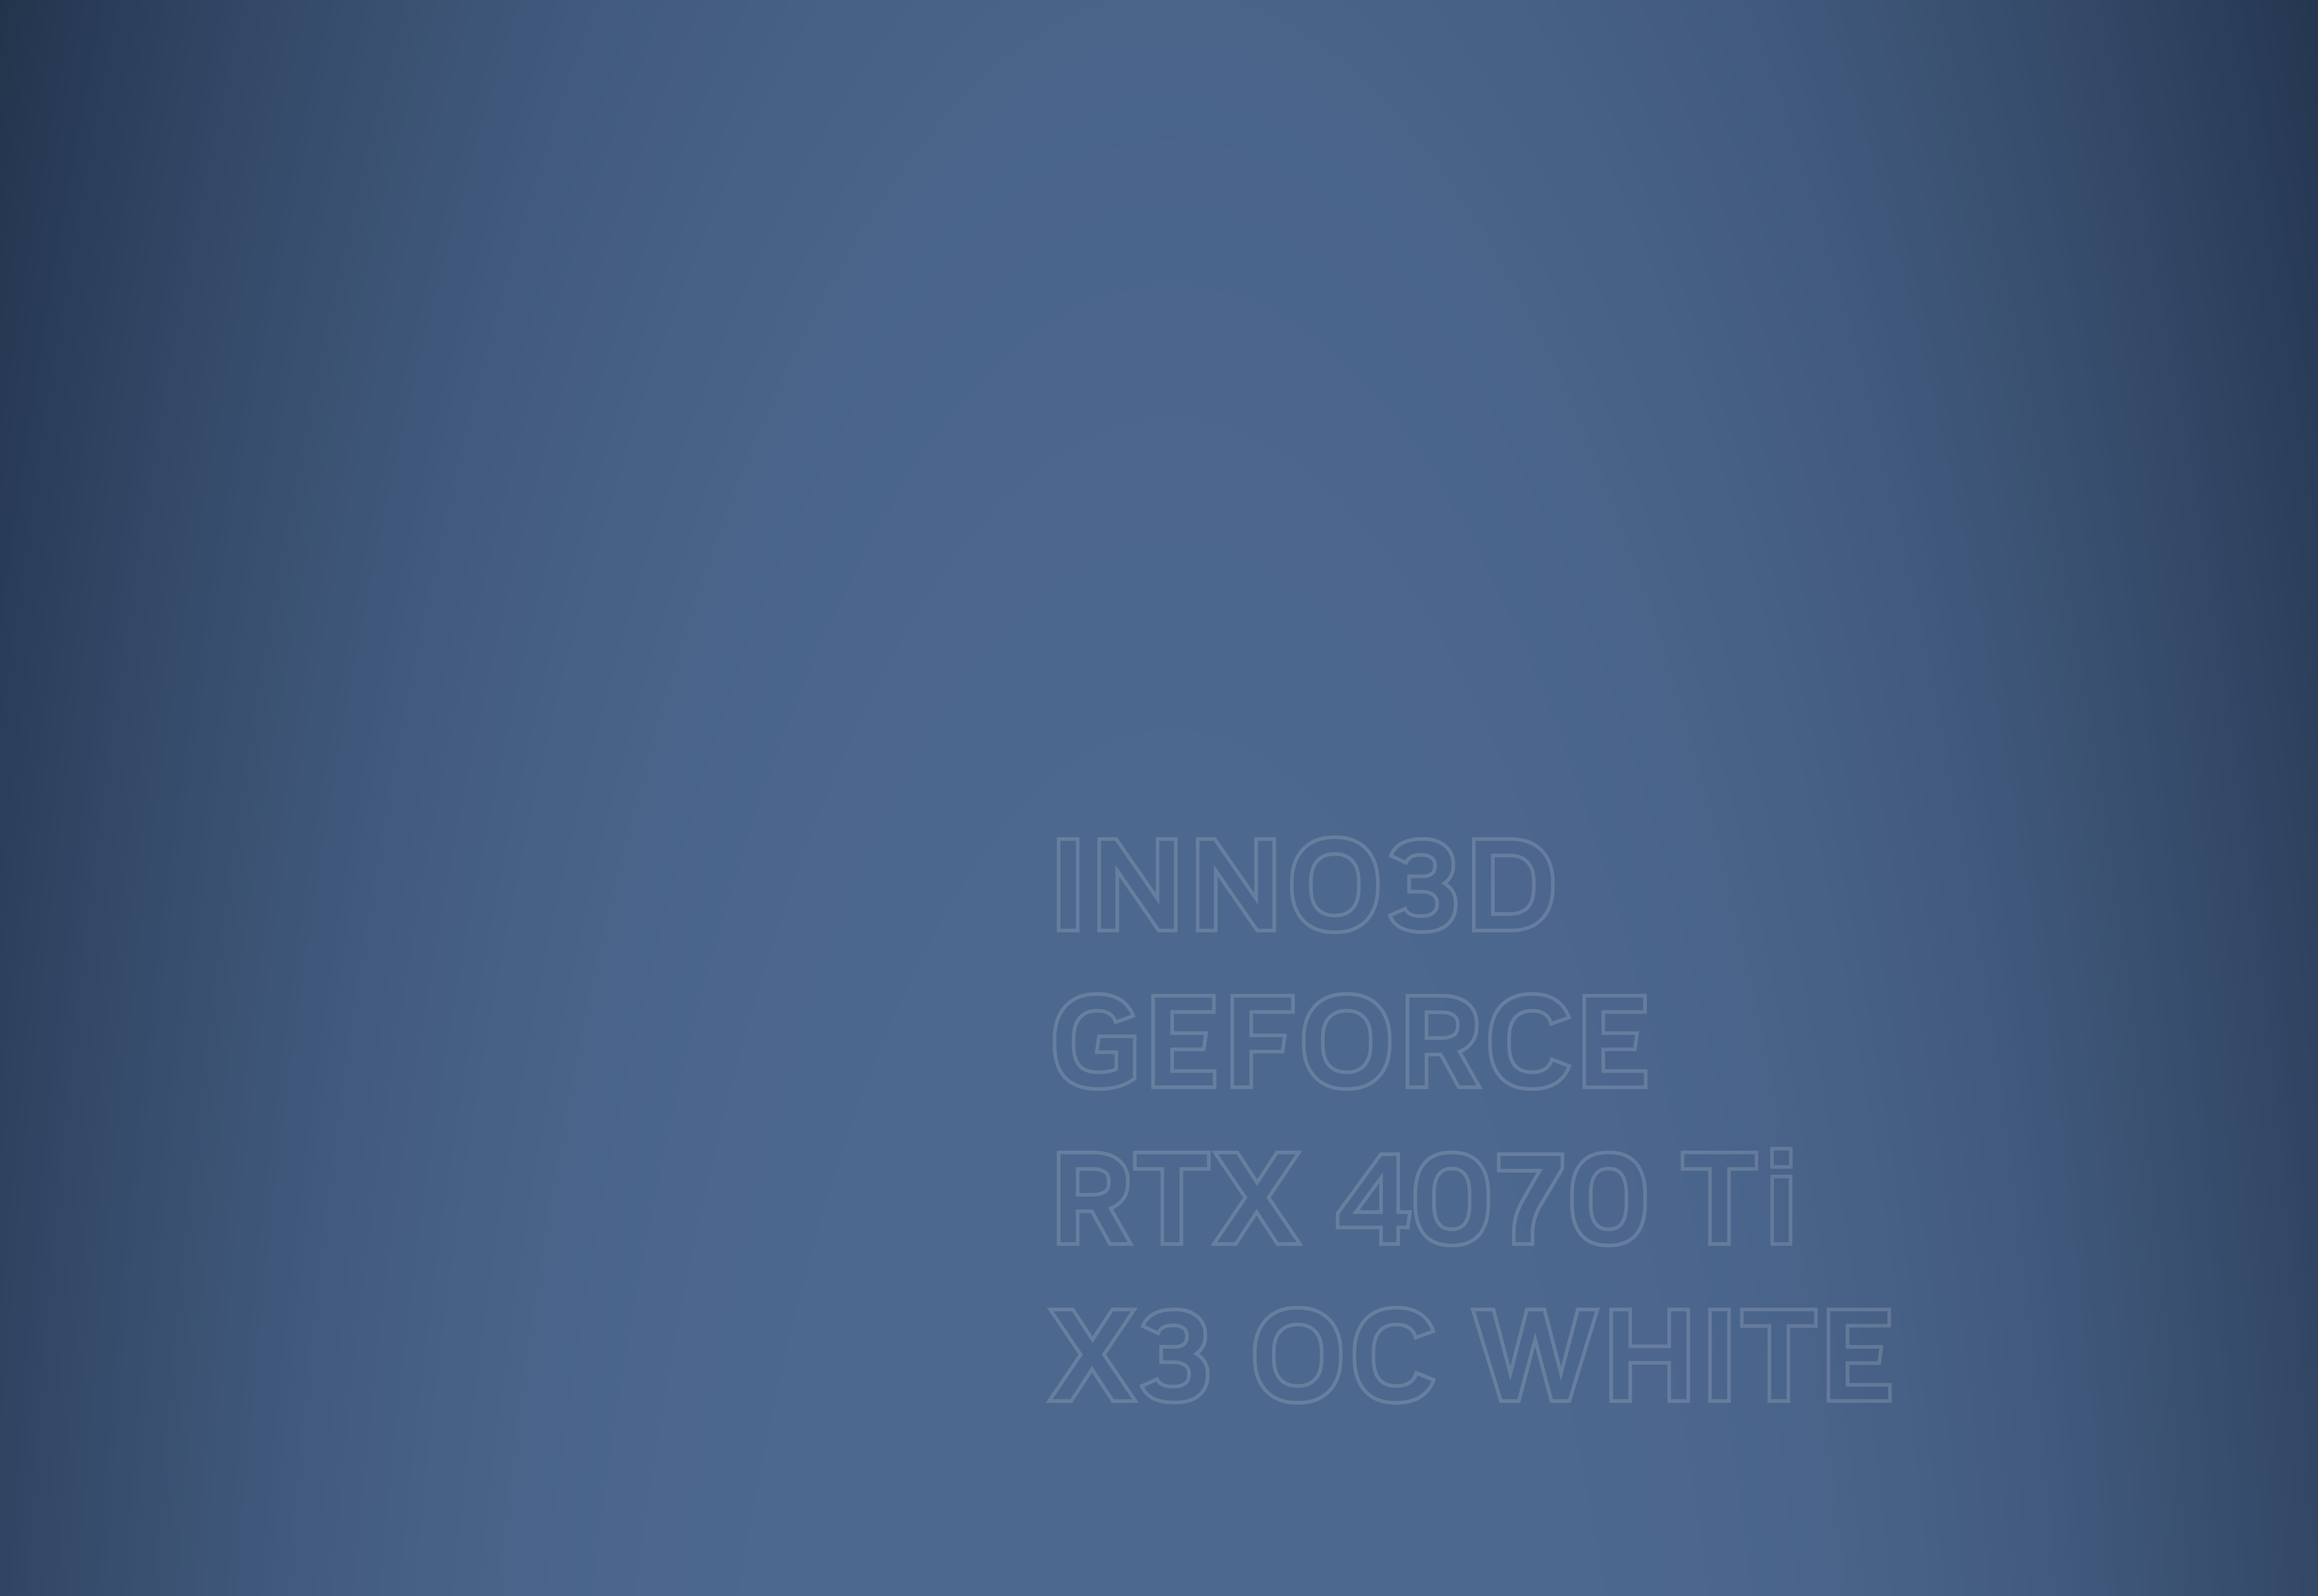 LP_4070Ti_X3_OC_WHITE_blank_blue_bg_word.png